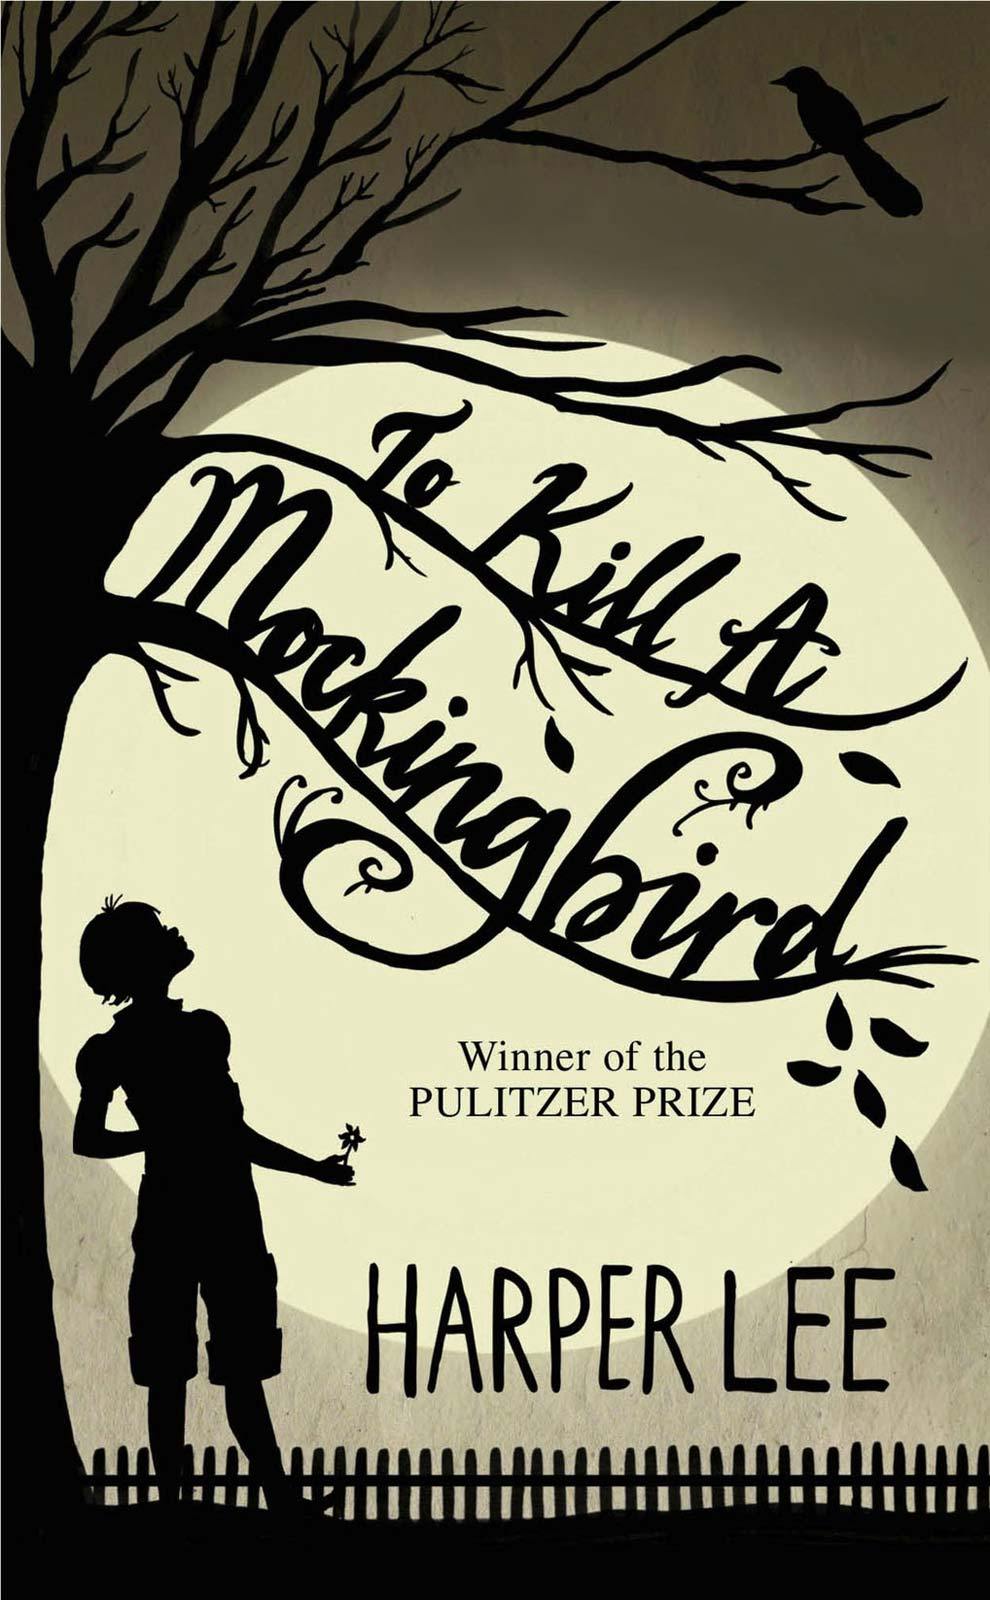 To Kill a Mockingbird Novel by Harper Lee - Book A Book